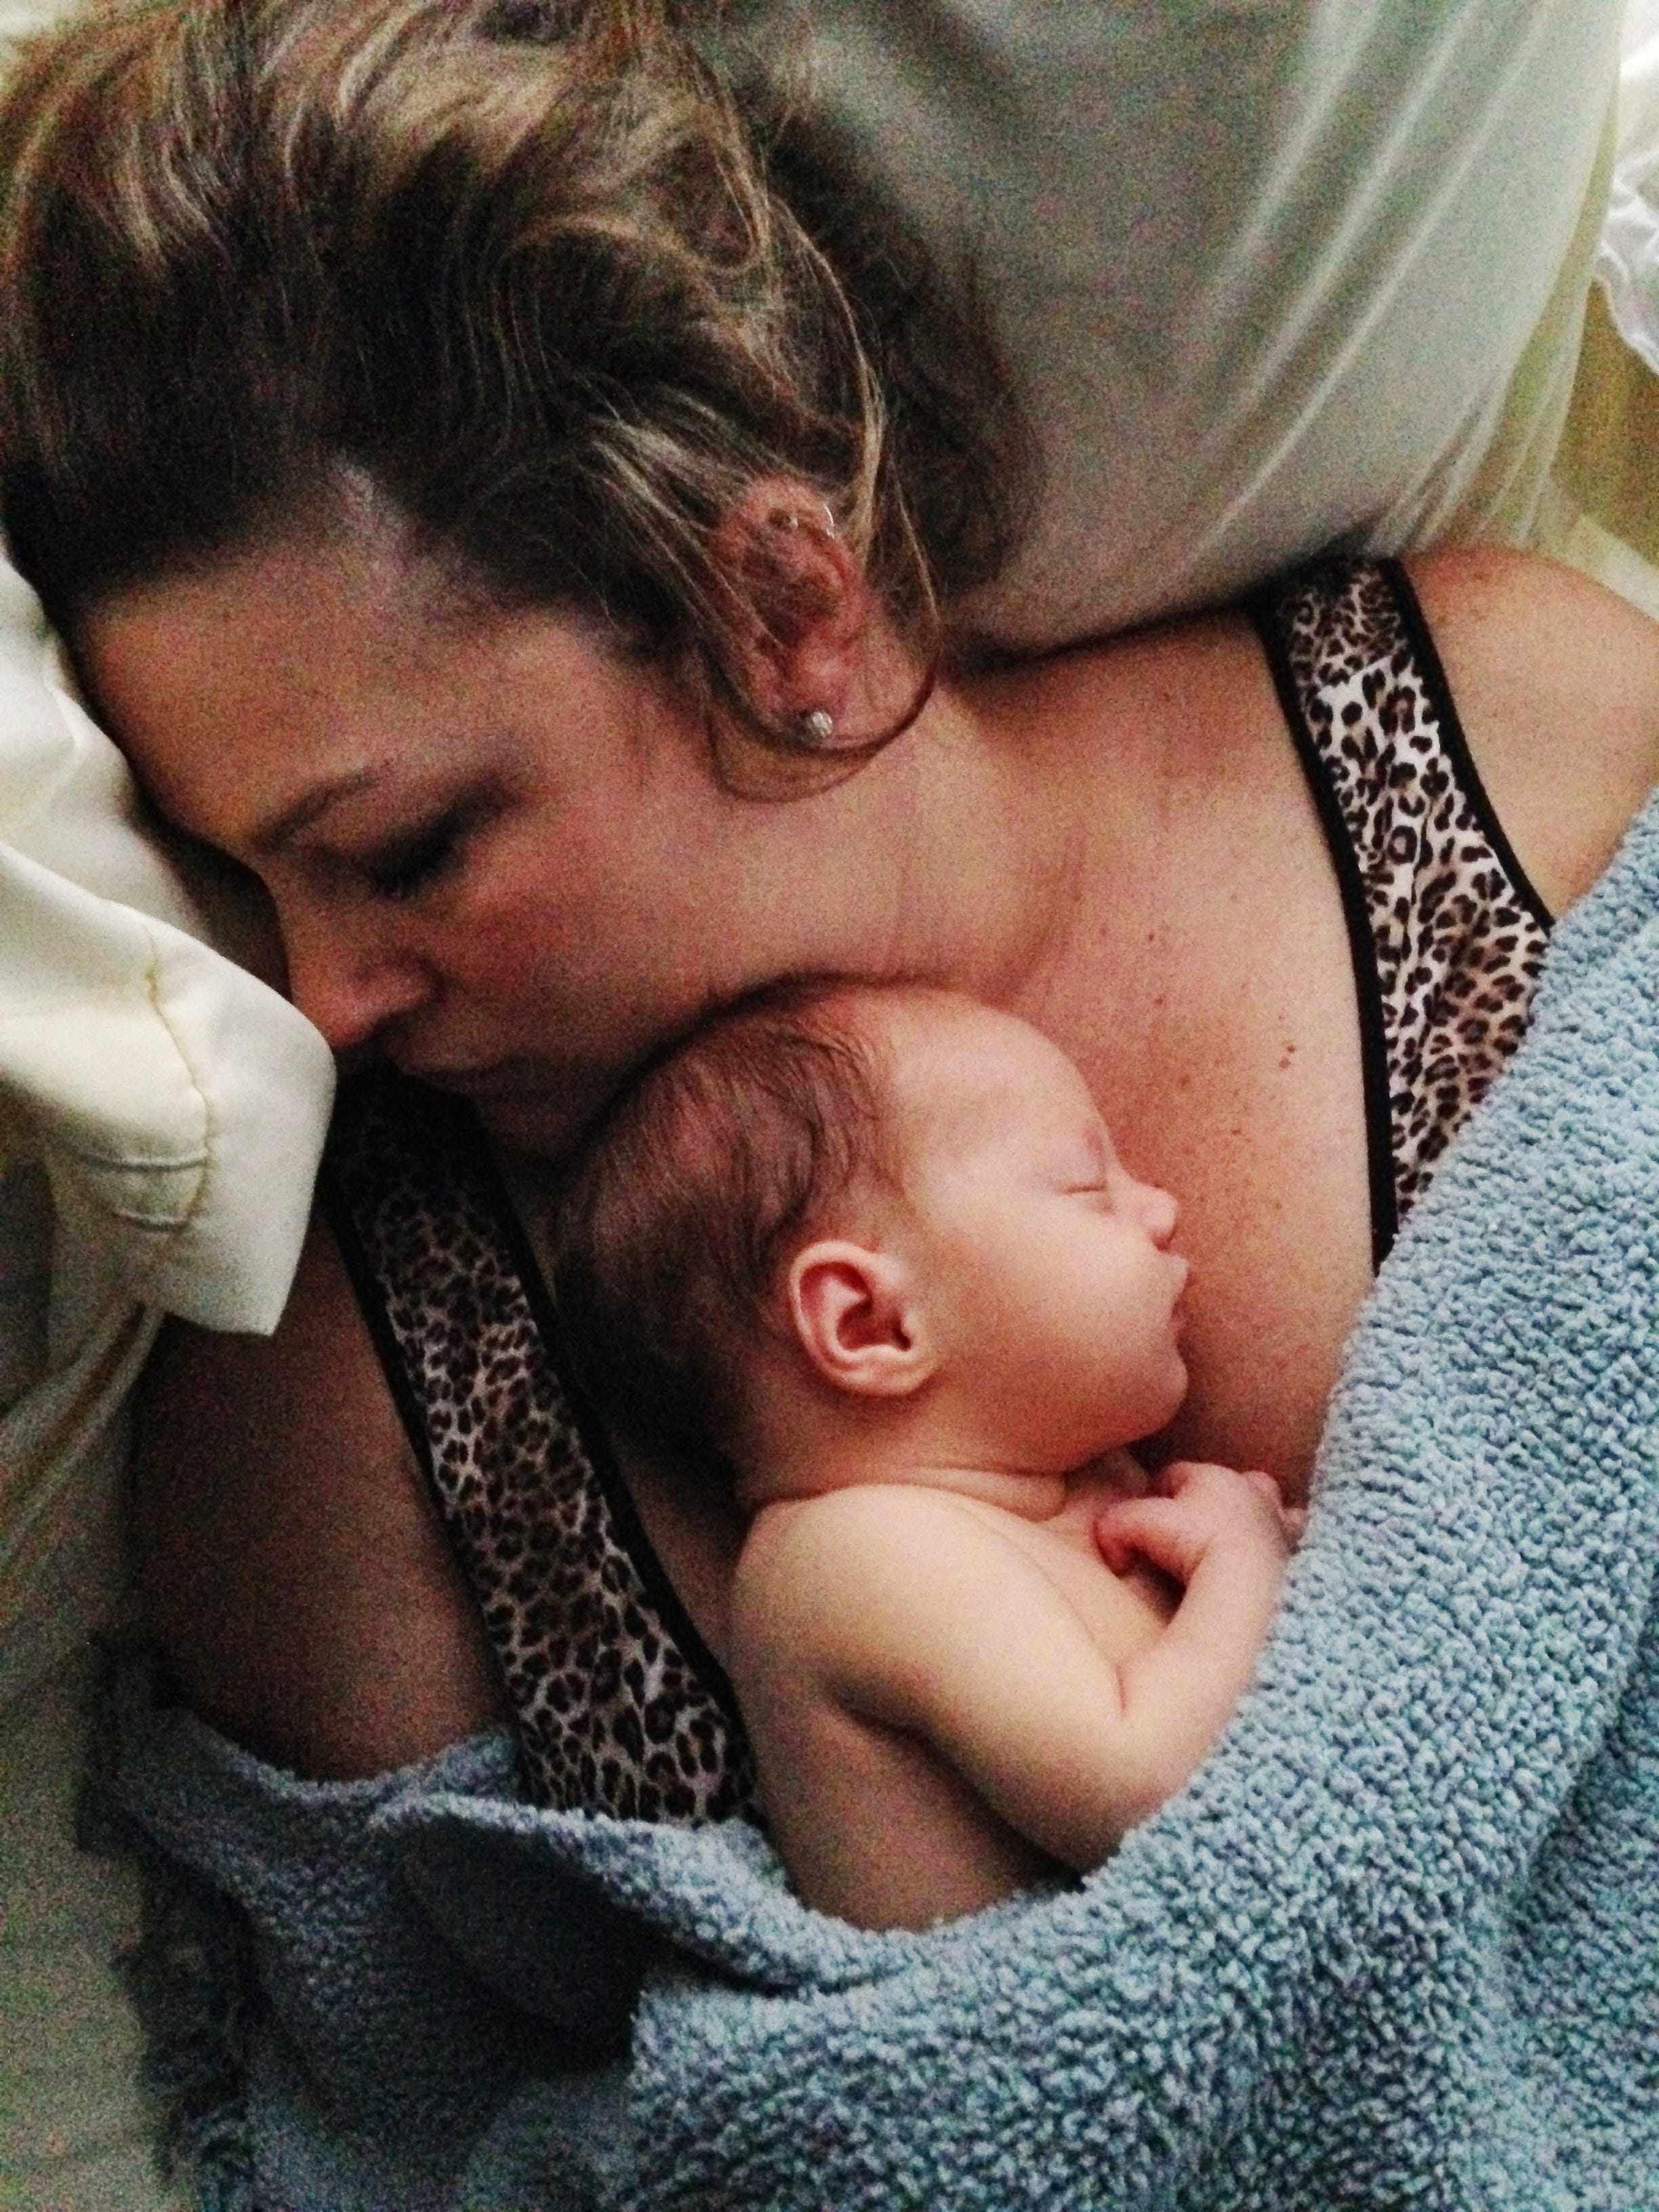 safety way to co sleep with newborn